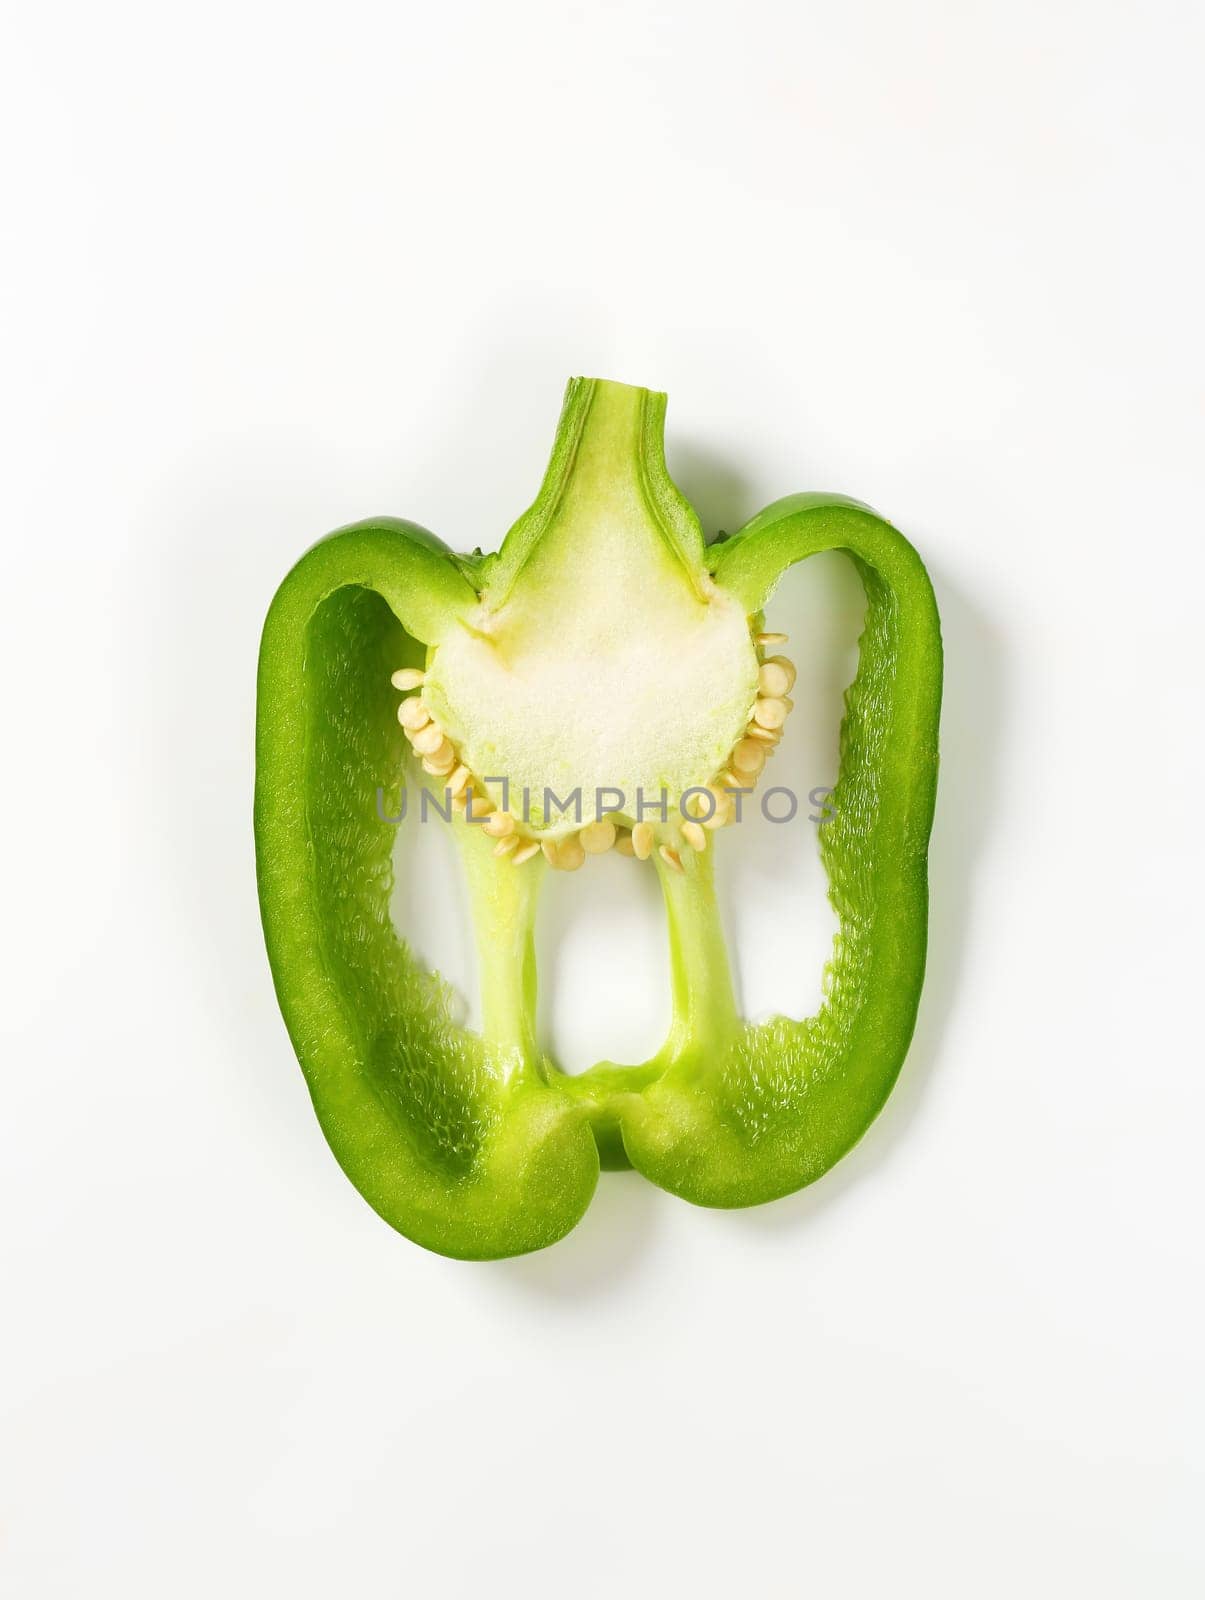 Thin slice of green bell pepper (cross section)